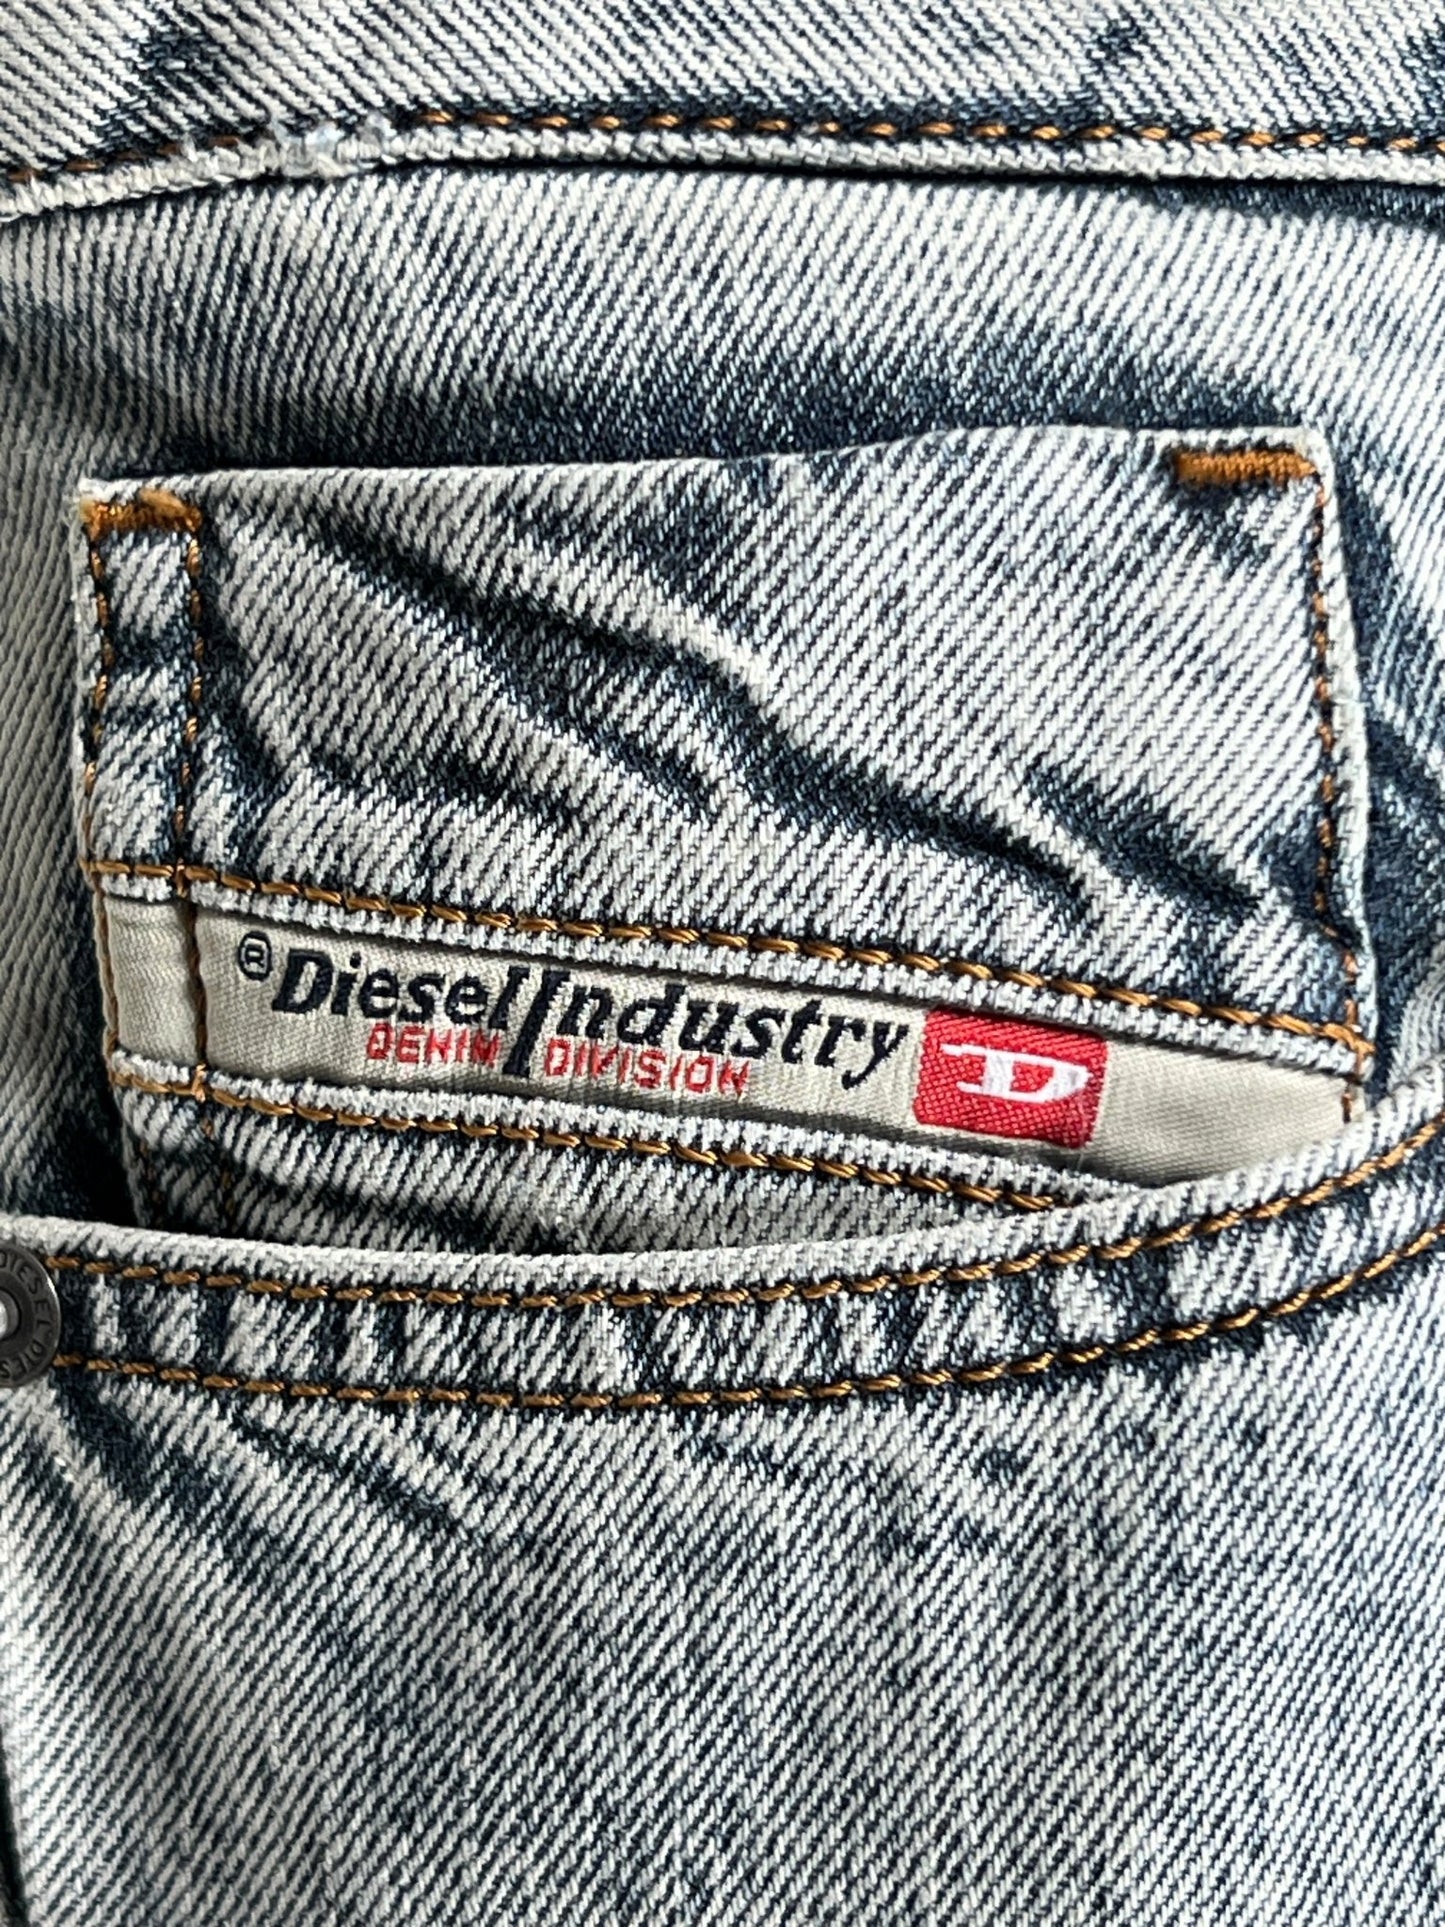 A label on a piece of denim clothing reading "DIESEL 1955 D-REKIV-S1 9160 DENIM industry denim division" with orange stitching details.